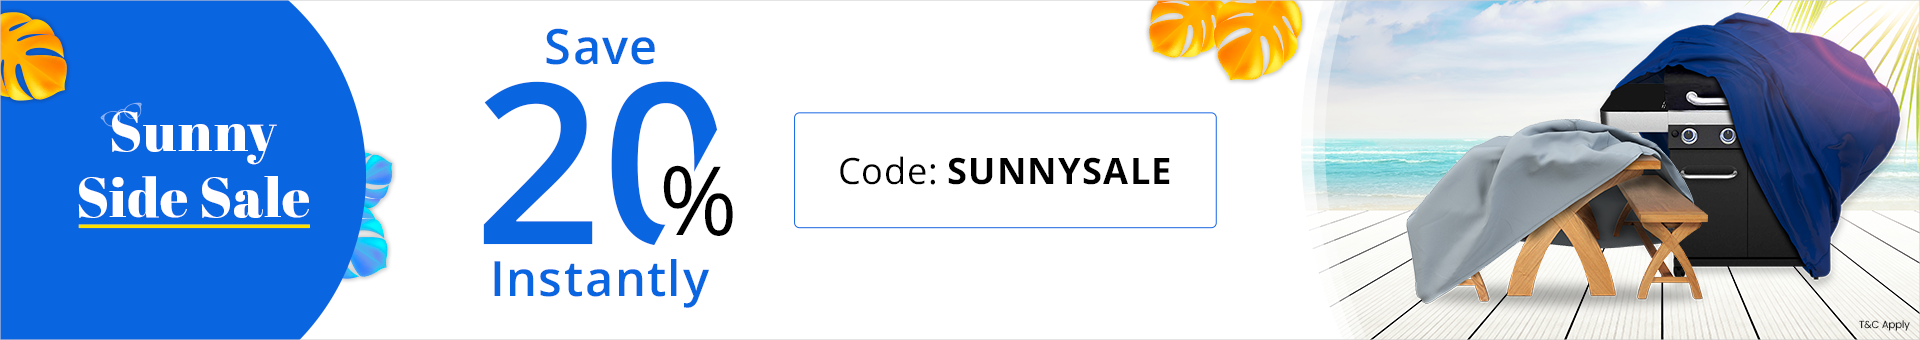 Sunny Side Sale